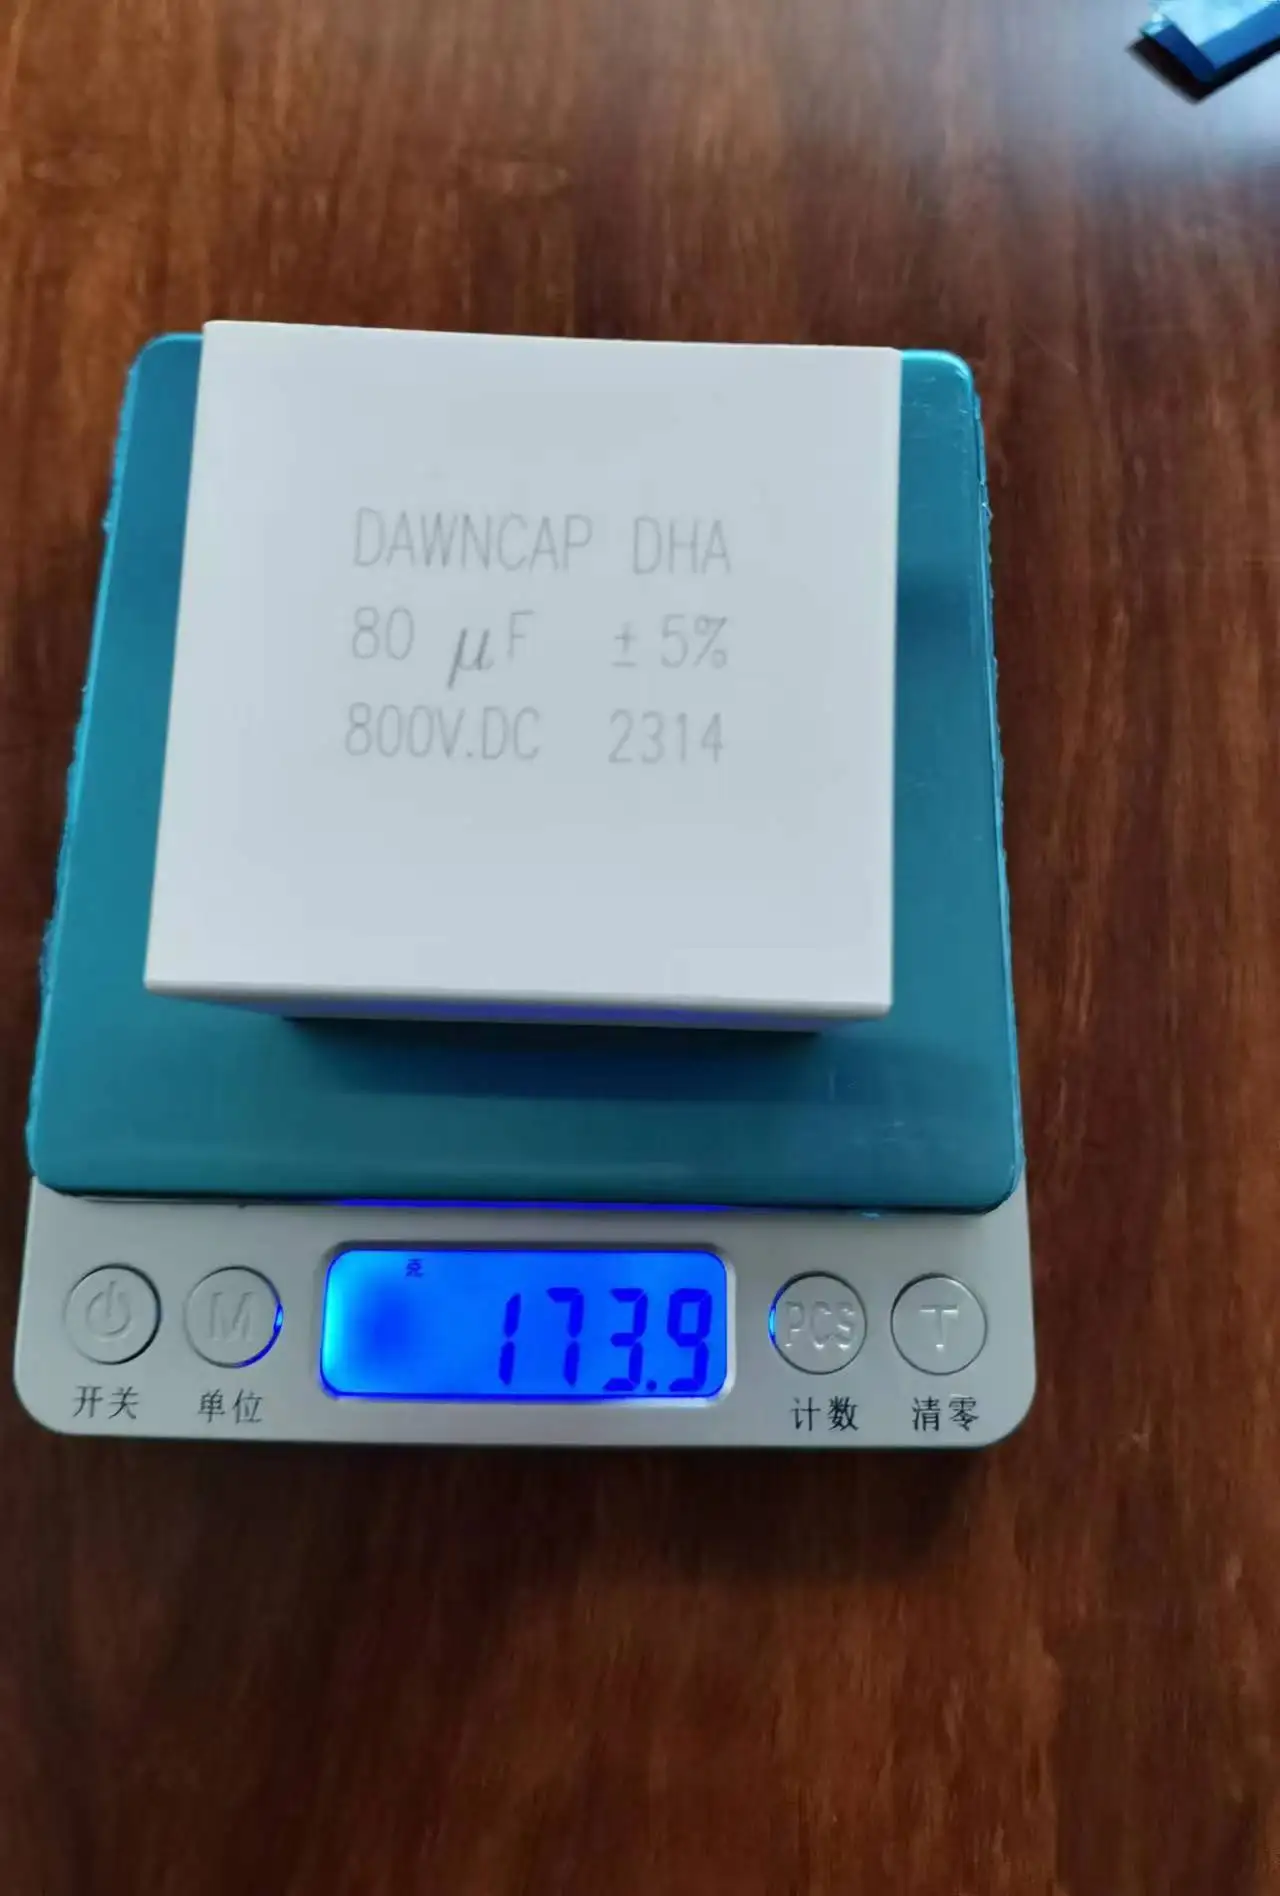 DAWNCAP 80UF  800VDC  DHA DC-LINK Filter capacitor